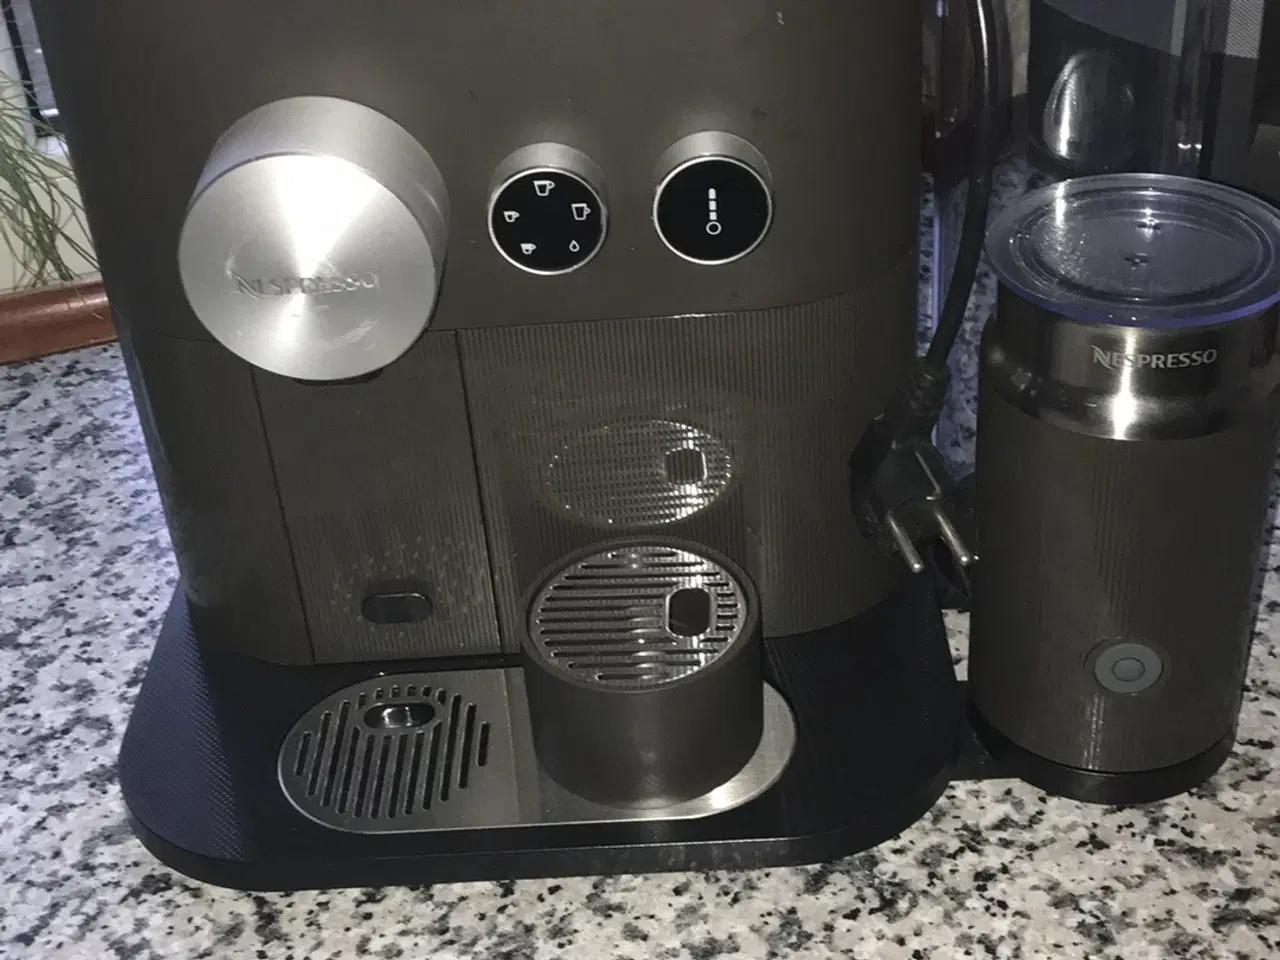 Billede 4 - Kaffemaskine nespresso ekspert